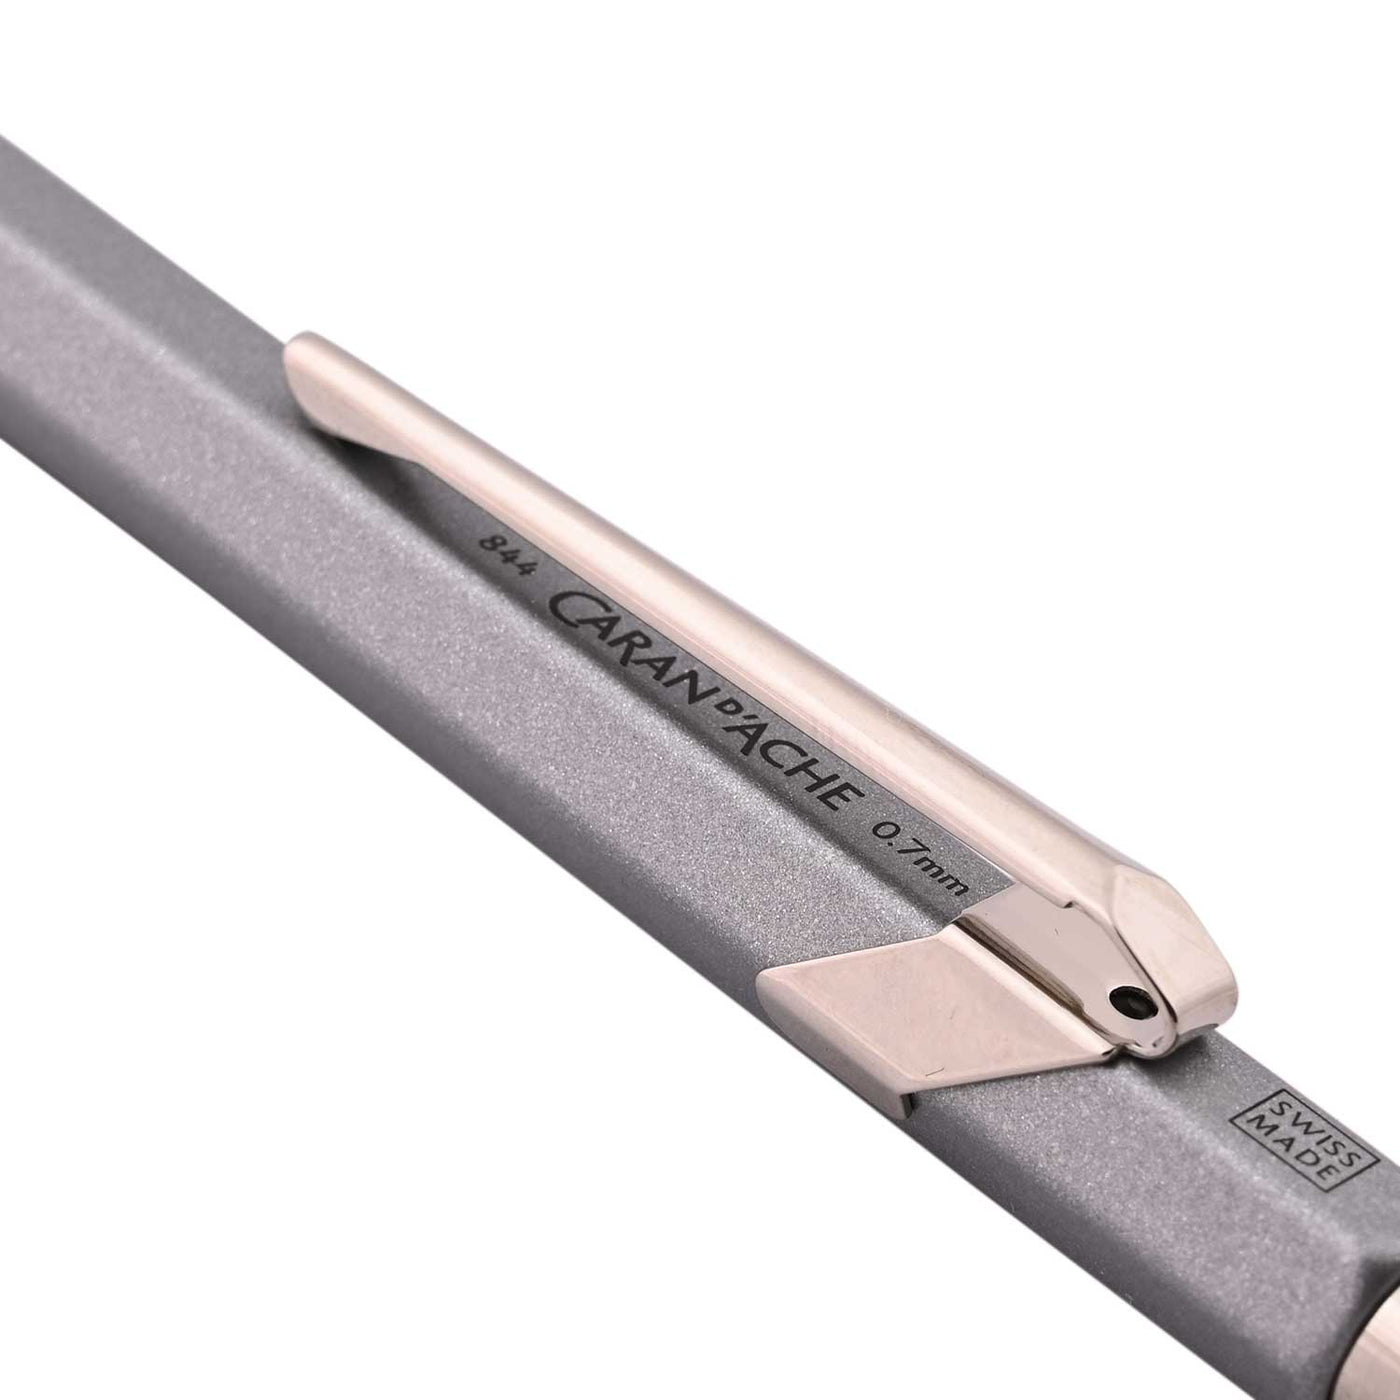  Caran d'Ache 849 Classic 0.7mm Mechanical Pencil - Grey 5